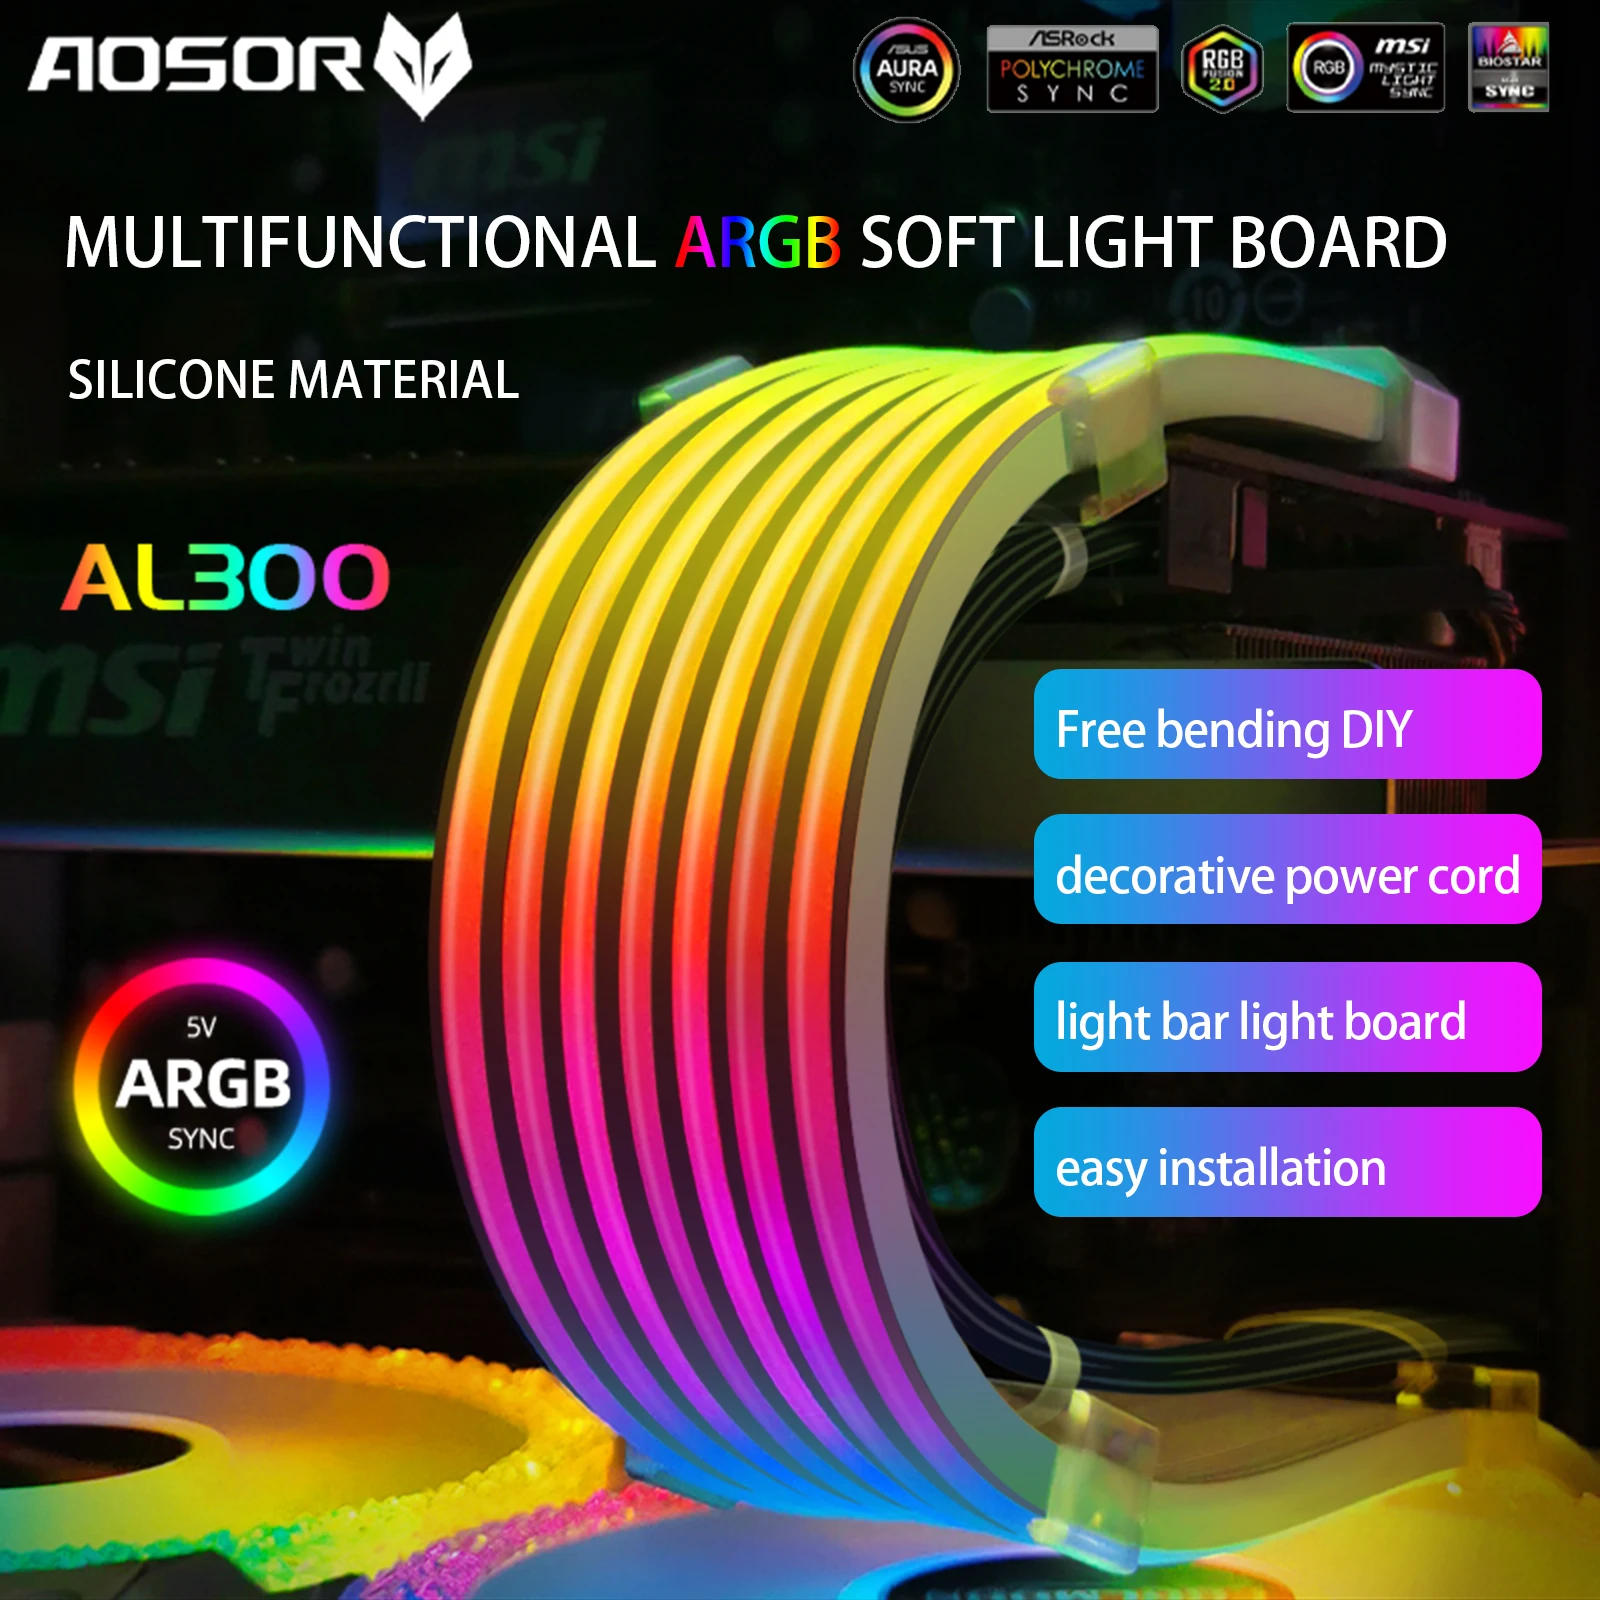 

COOLMOON AOSOR Lamp Tape PC Backlight Flexible Light Bar 5V ARGB Aura Sync Flexible LED Light Bendable DIY for 24PIN Motherboard